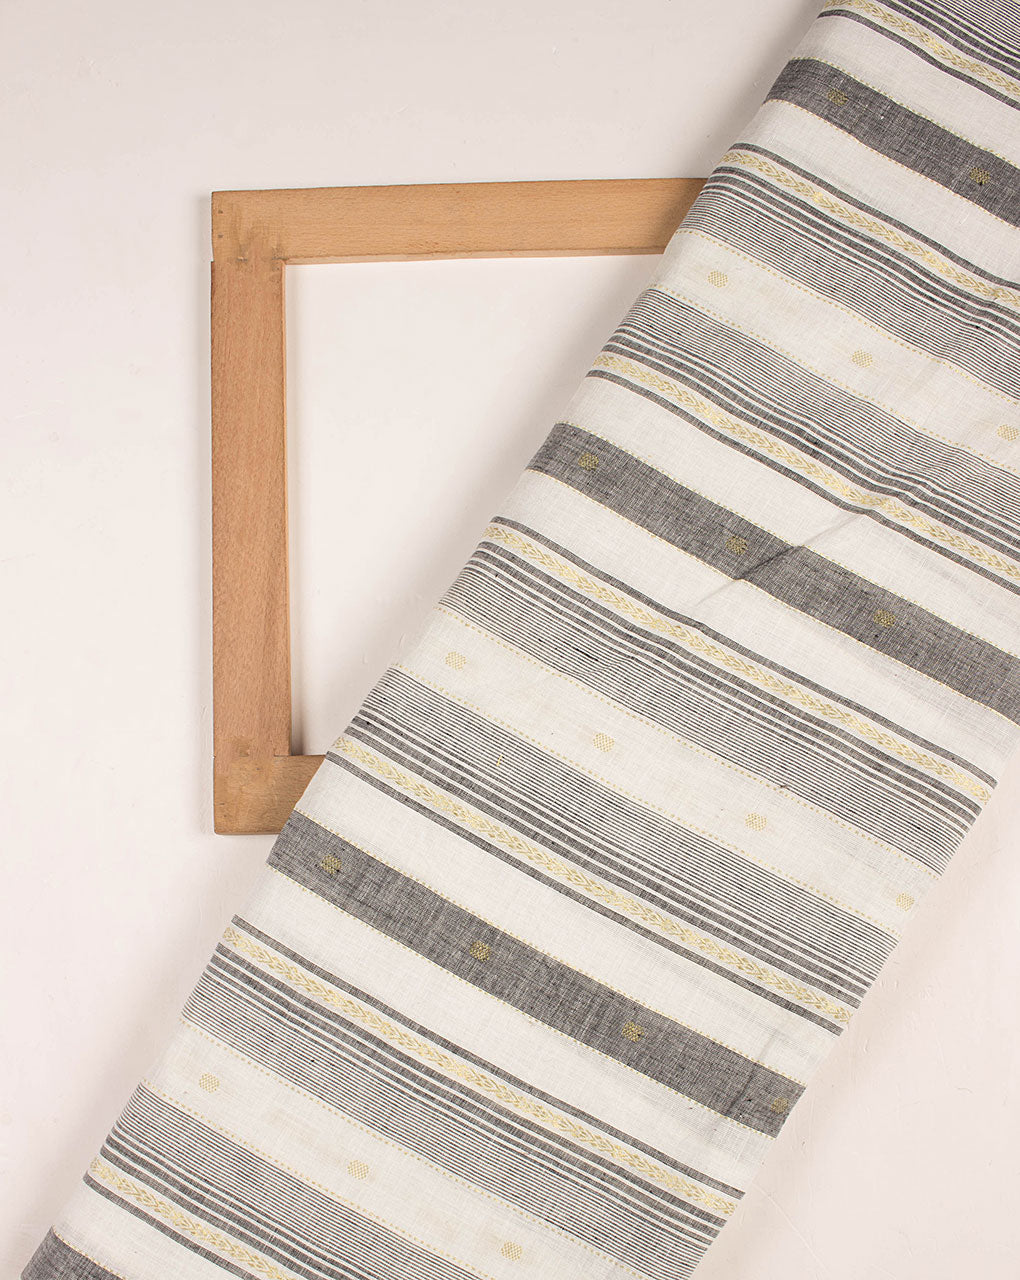 Zari Jacquard Loom Textured Cotton Fabric - Fabriclore.com